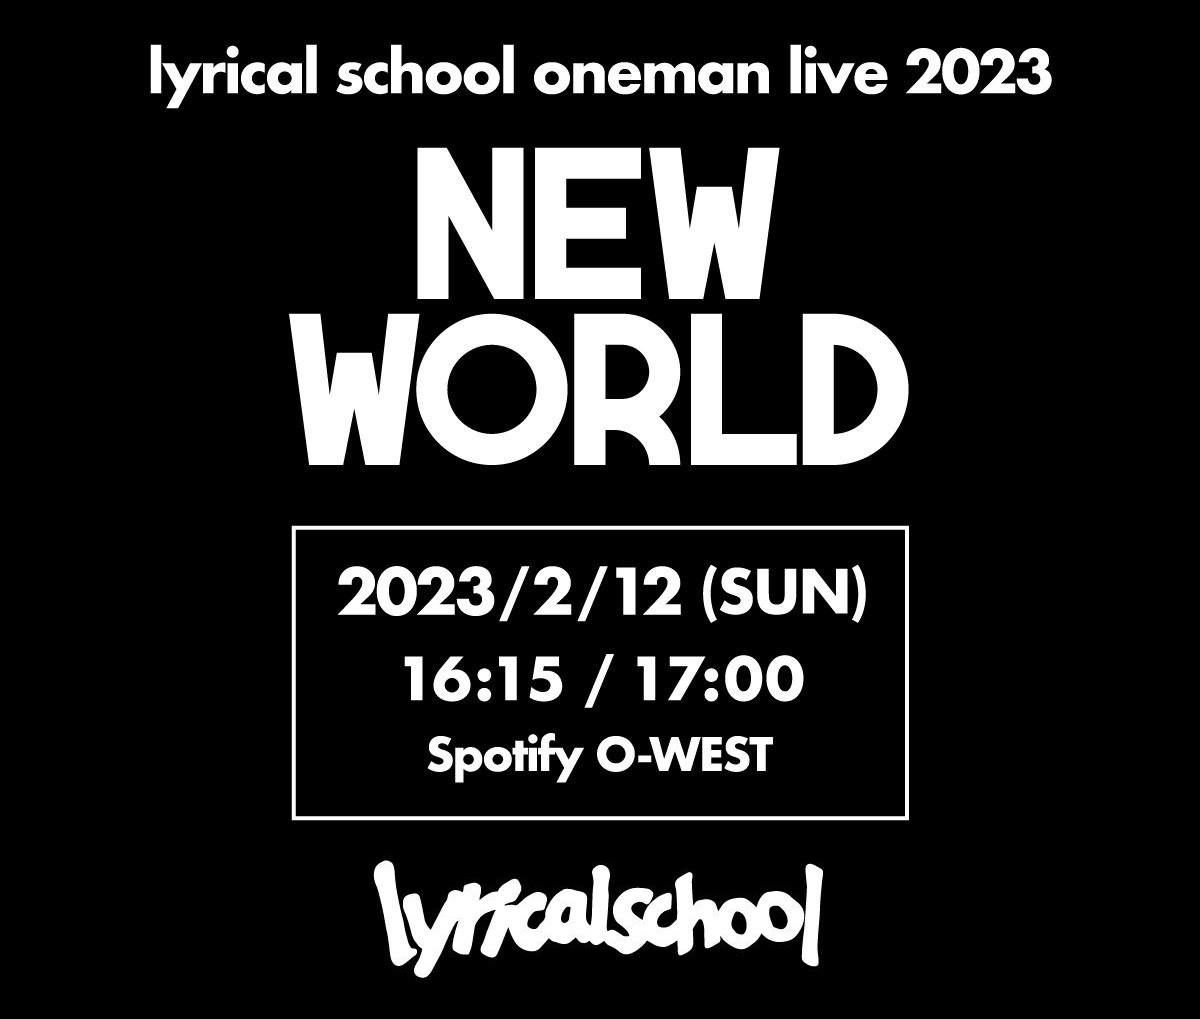 lyrical school oneman live 2023 @Spotify O-WEST